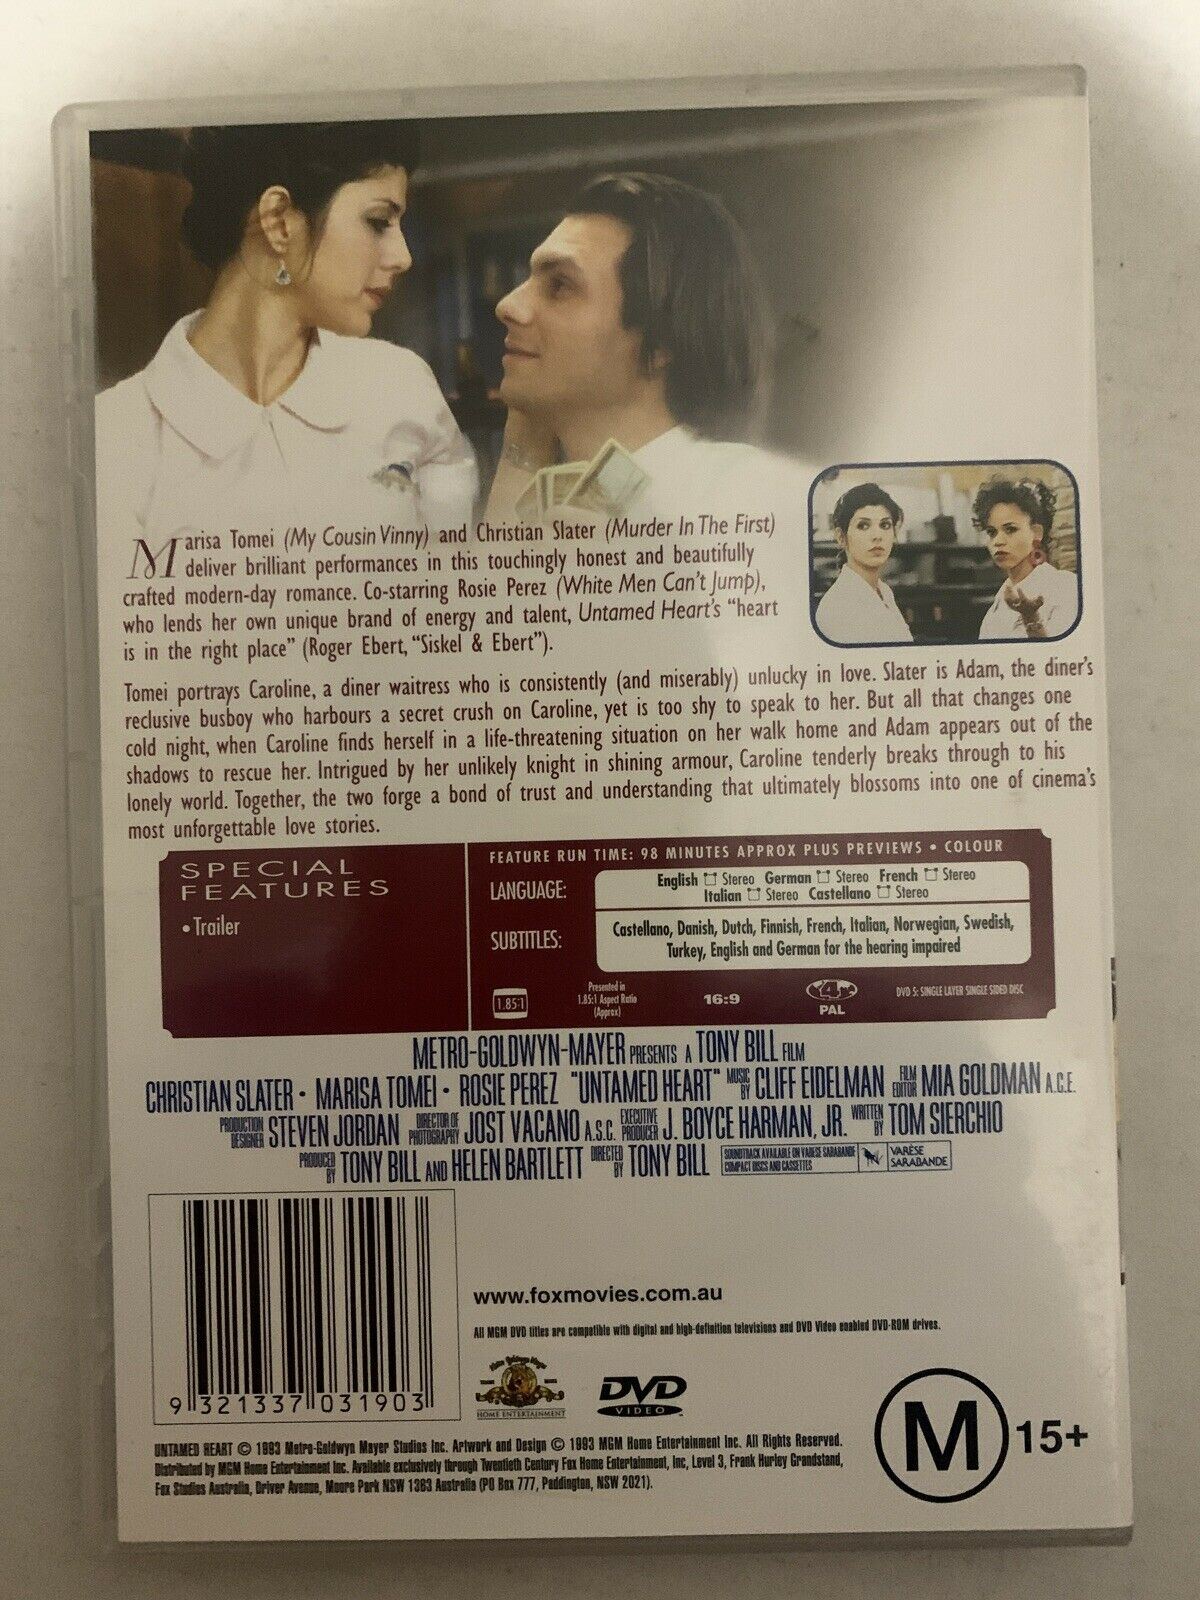 Untamed Heart (DVD, 1993) Christian Slater, Marisa Tomei. Region 4